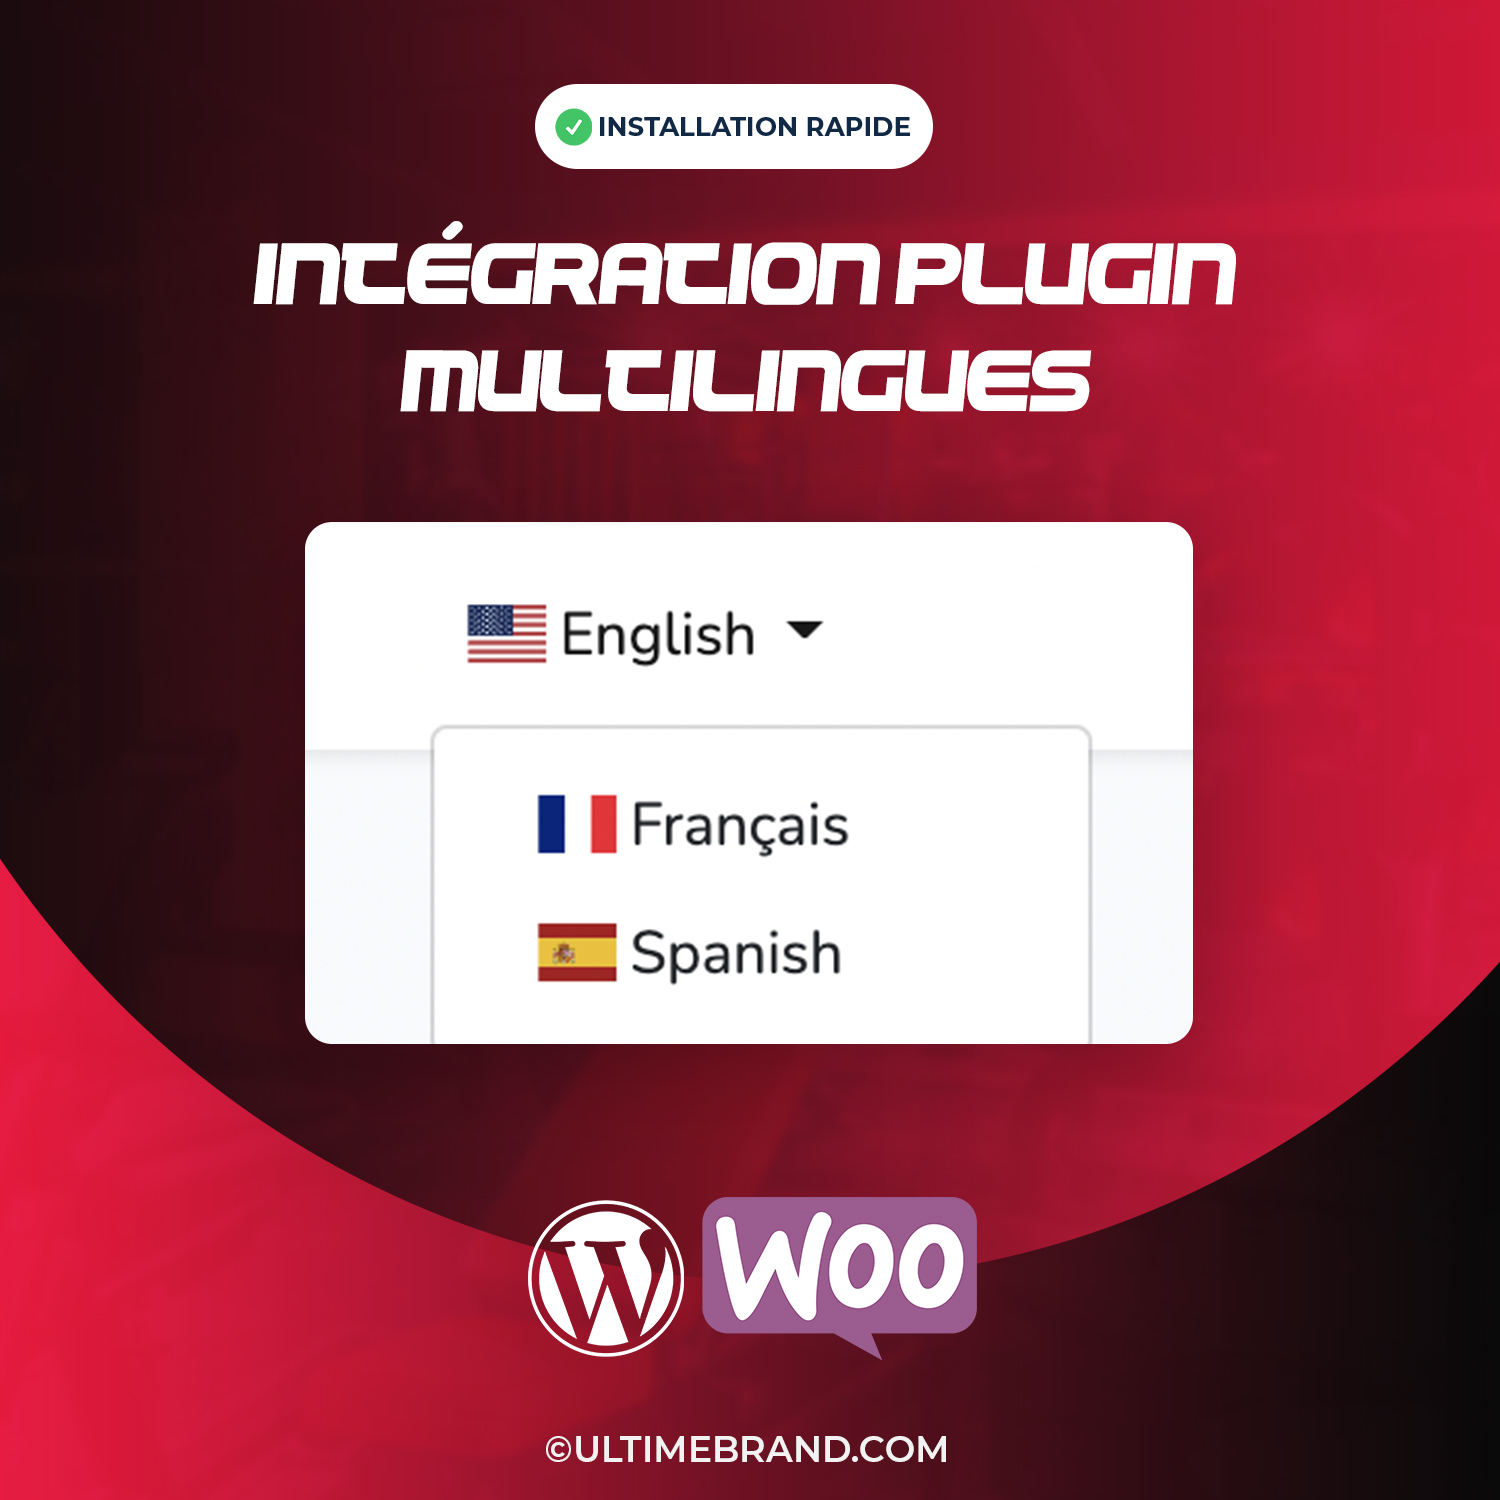 Intégration Plugin Multilingues WordPress/WooCommerce